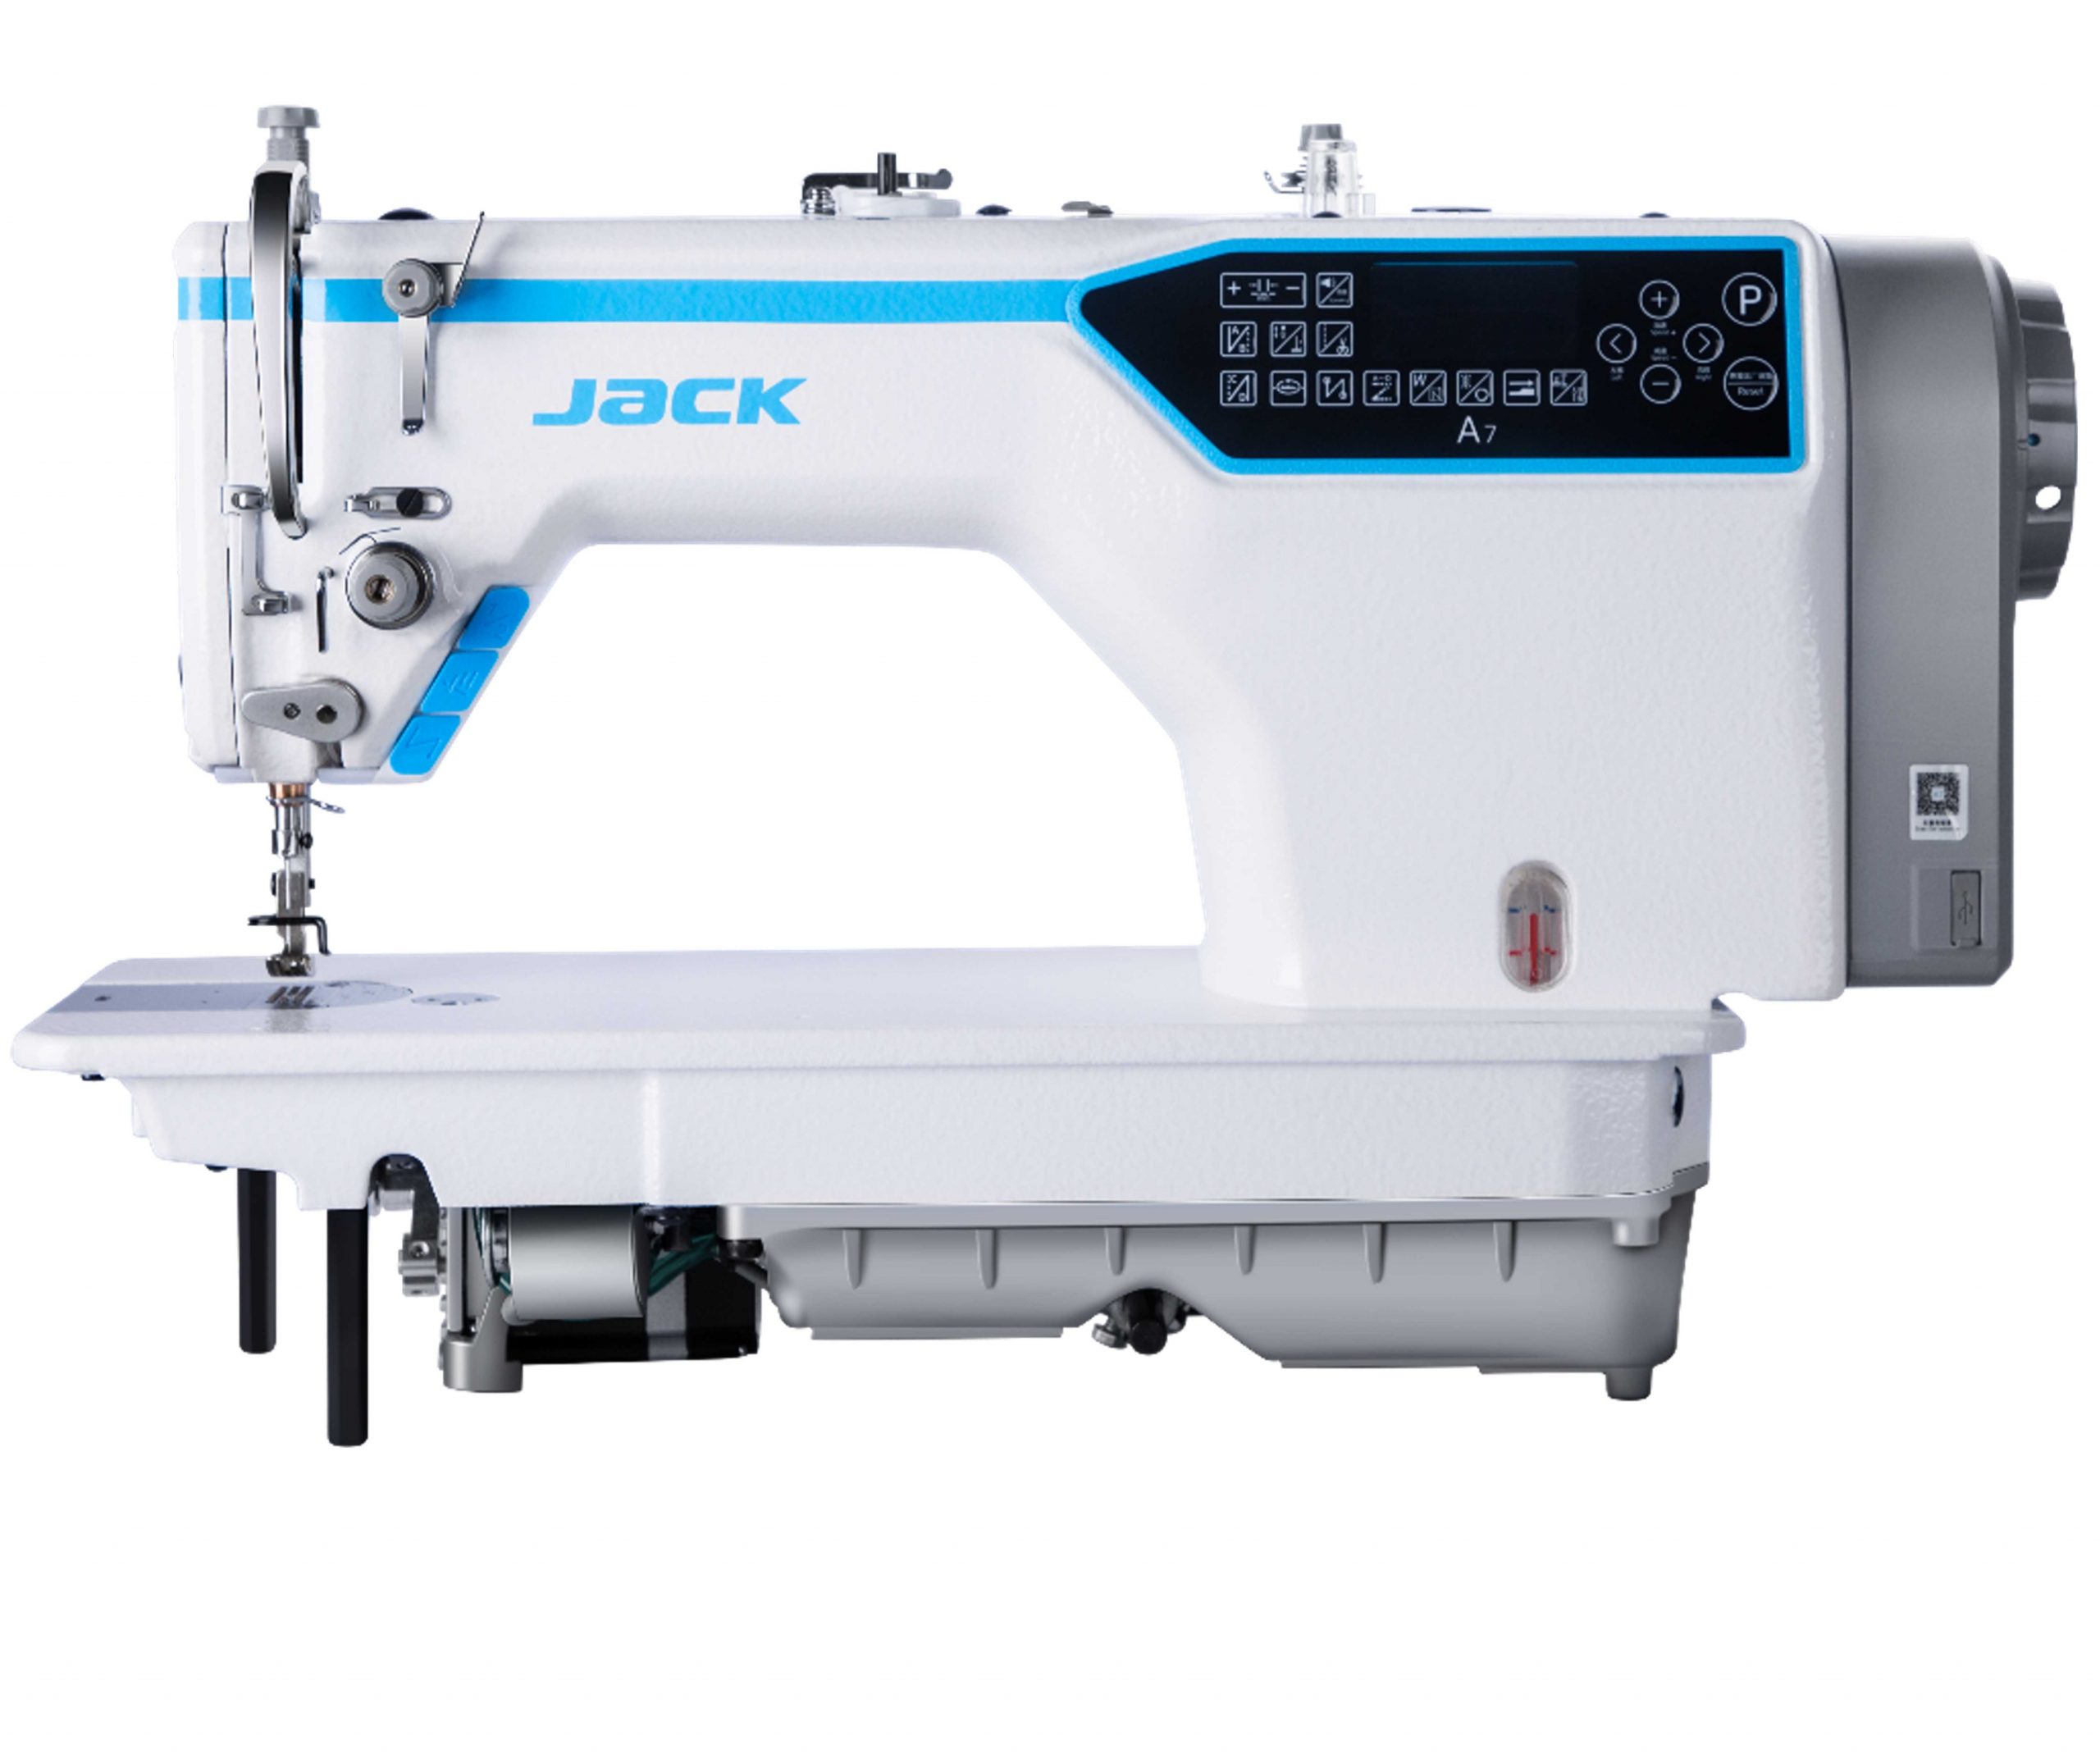 Jack A6 macchina lineare, Macchina per cucire professionale